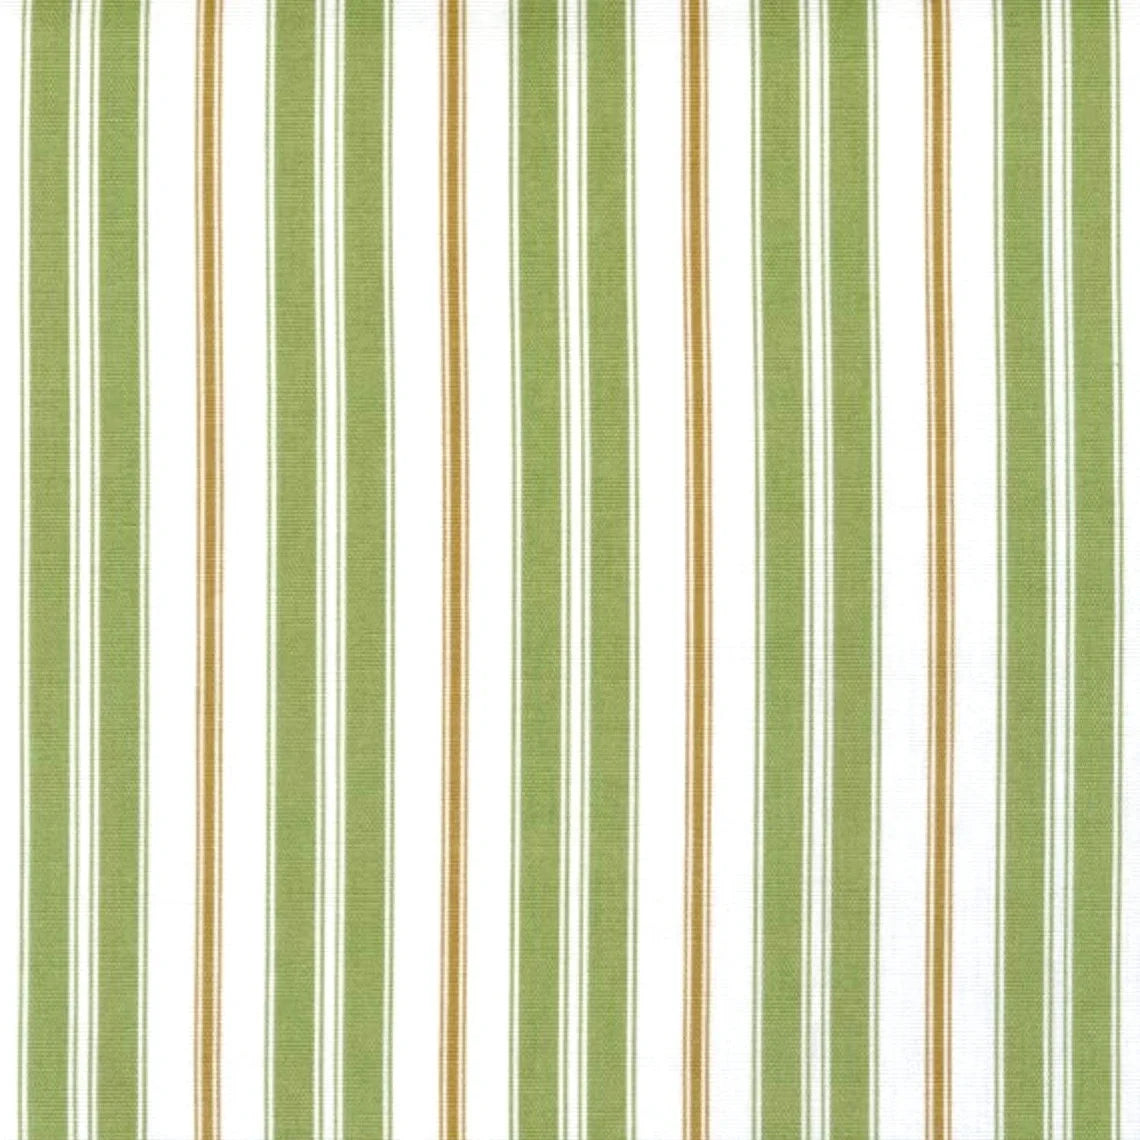 rod pocket curtain panels pair in newbury aloe green stripe- green, brown, white